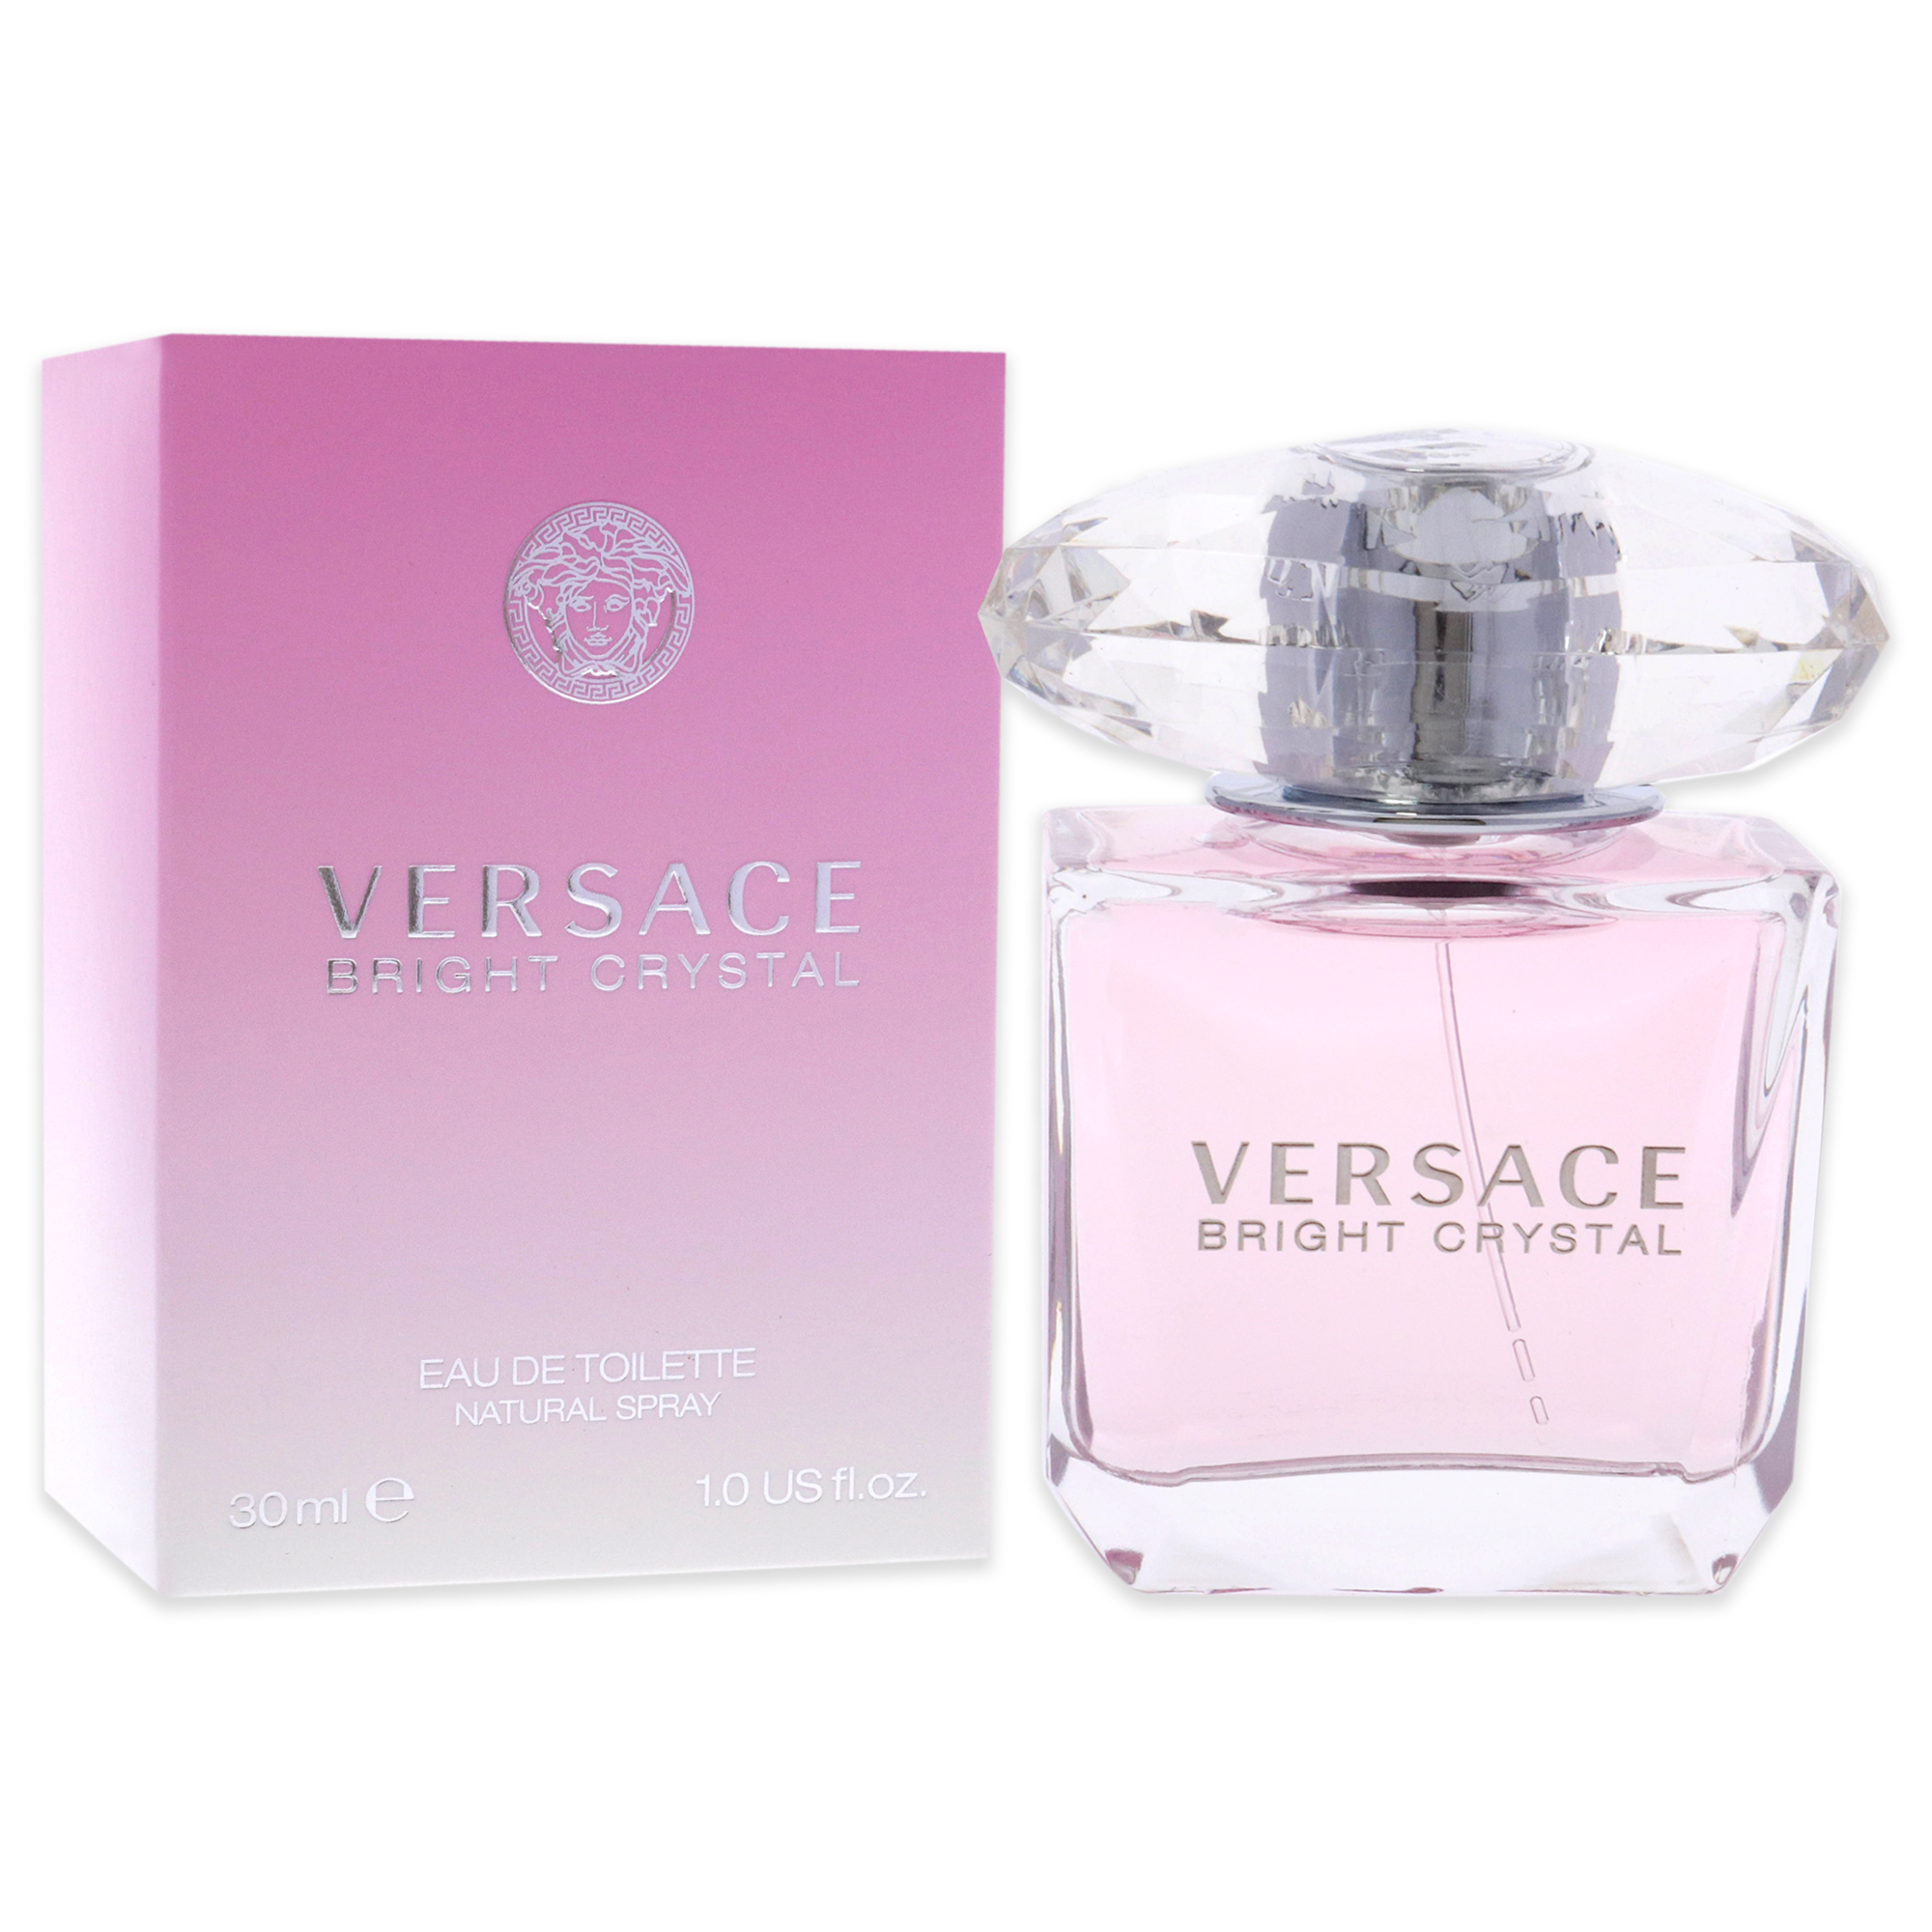 Bright Crystal by Versace Eau De Toilette Spray 1 oz for Women - image 3 of 6